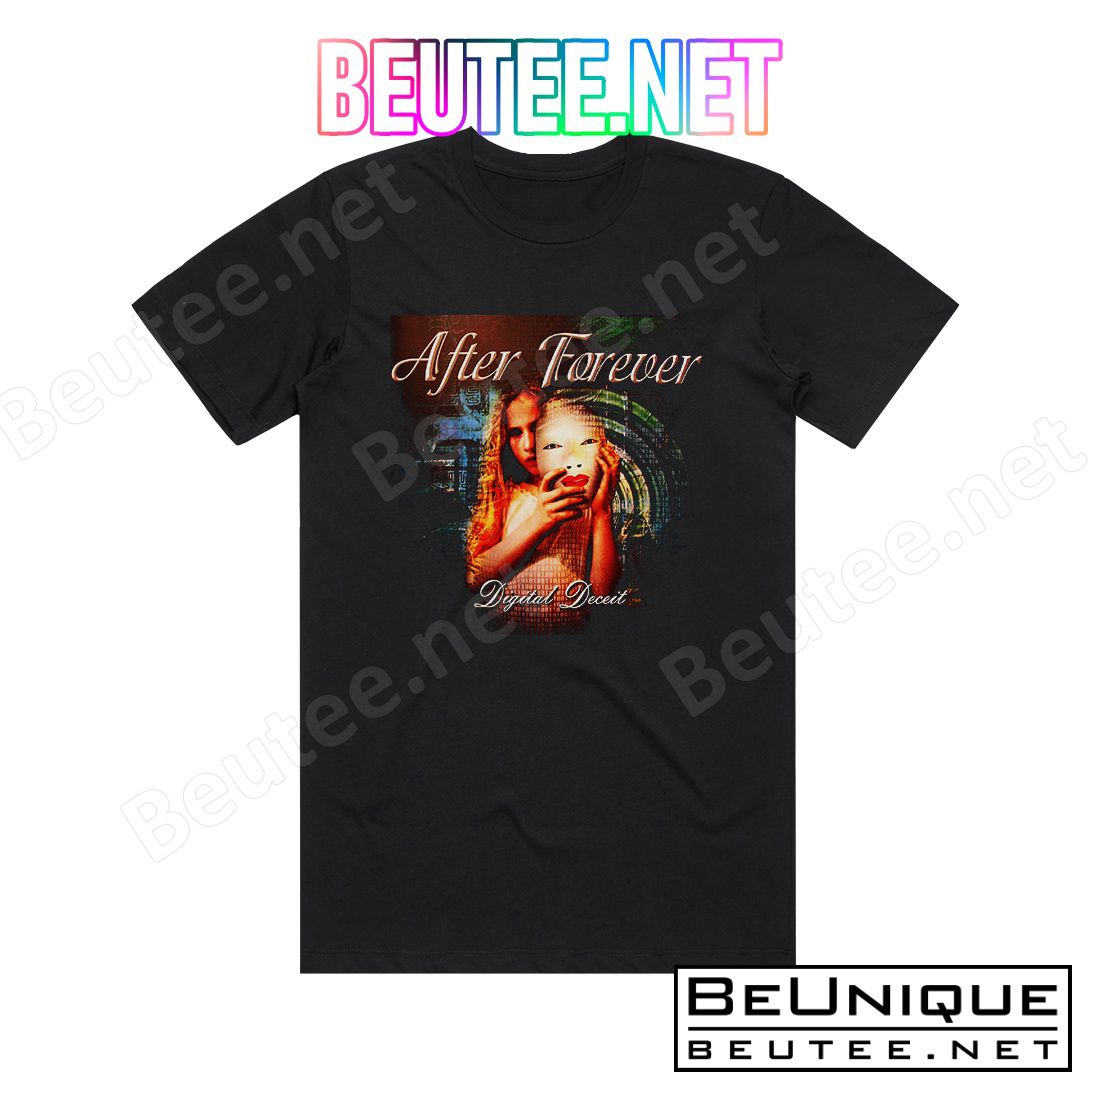 After Forever Digital Deceit Album Cover T-shirt